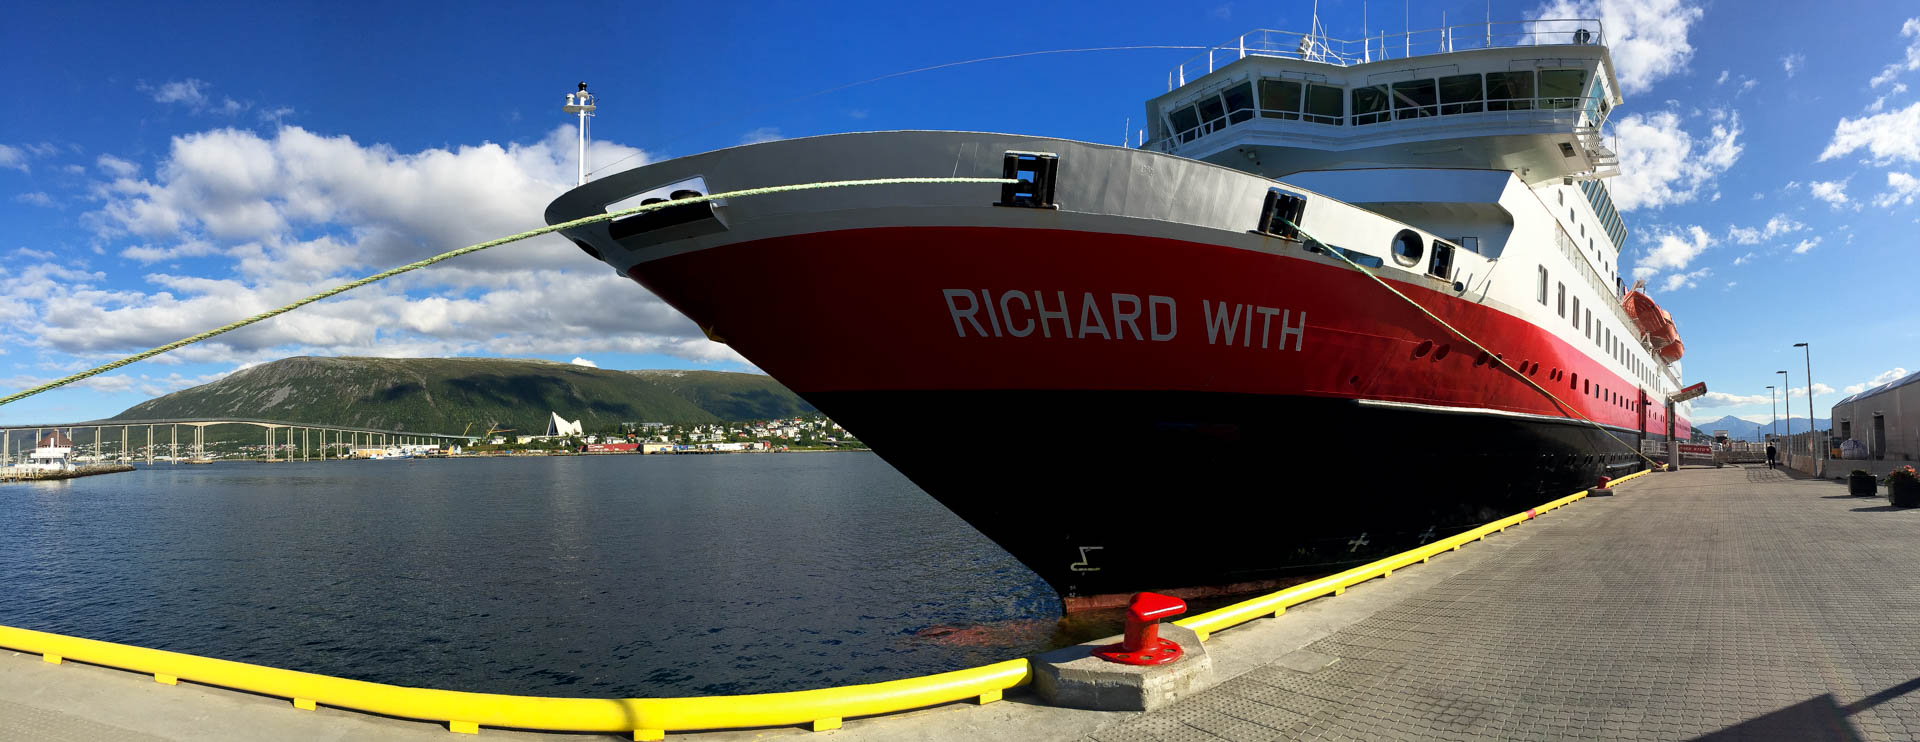 Richard With, founder of Hurtigruten. Four hours til casting off.